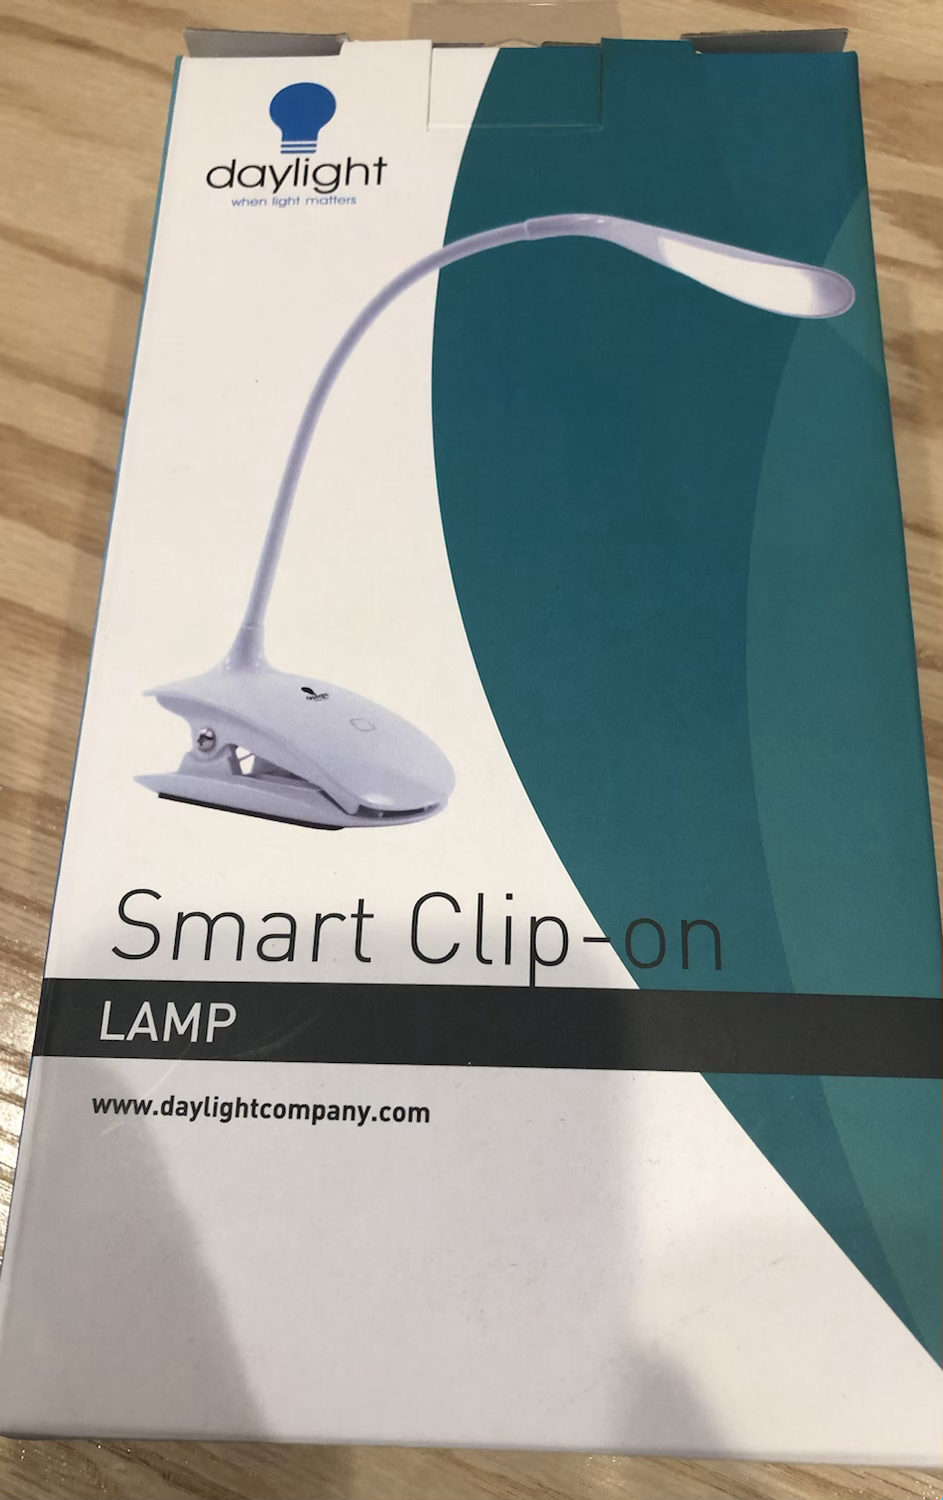 Daylight Smart clip on lamp